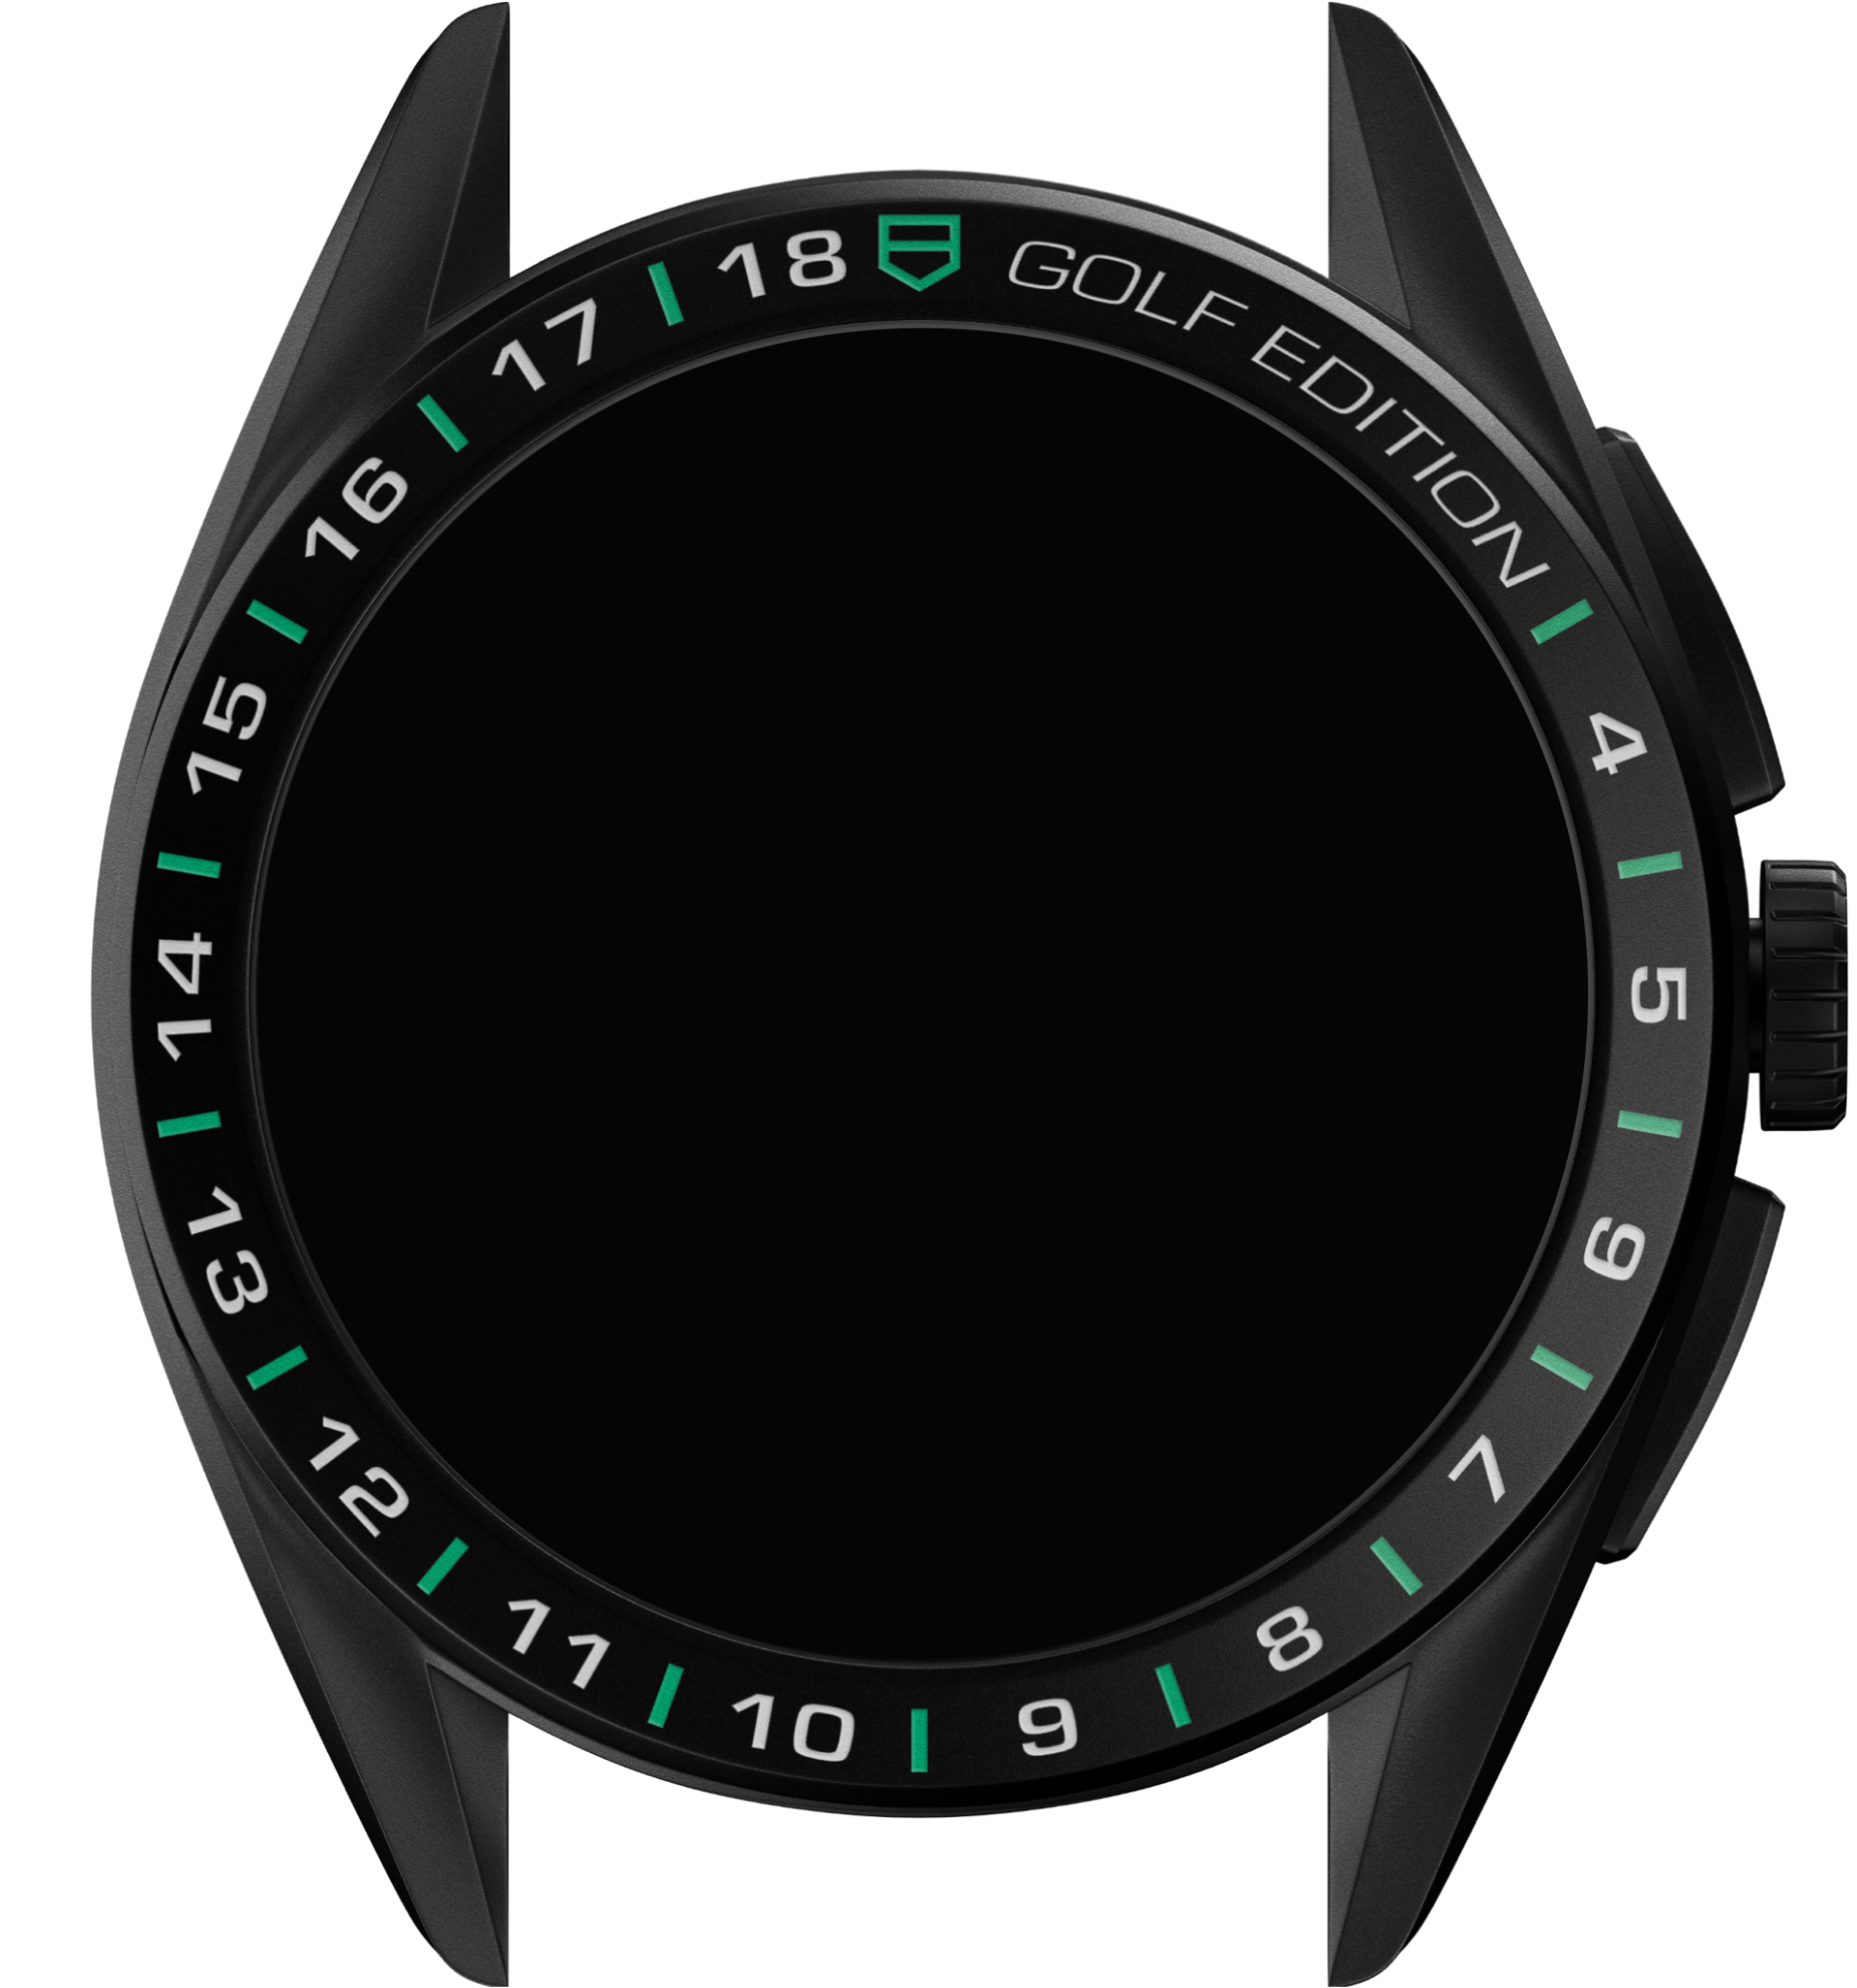 Porsche Oklahoma City - The all-new Porsche Design custom watch configurator  goes live tomorrow! Check it out at the link below! #PorscheOKC  https://www.porsche-design.com/us/en/timepieces/custom-built-timepieces/ configurator/ | Facebook